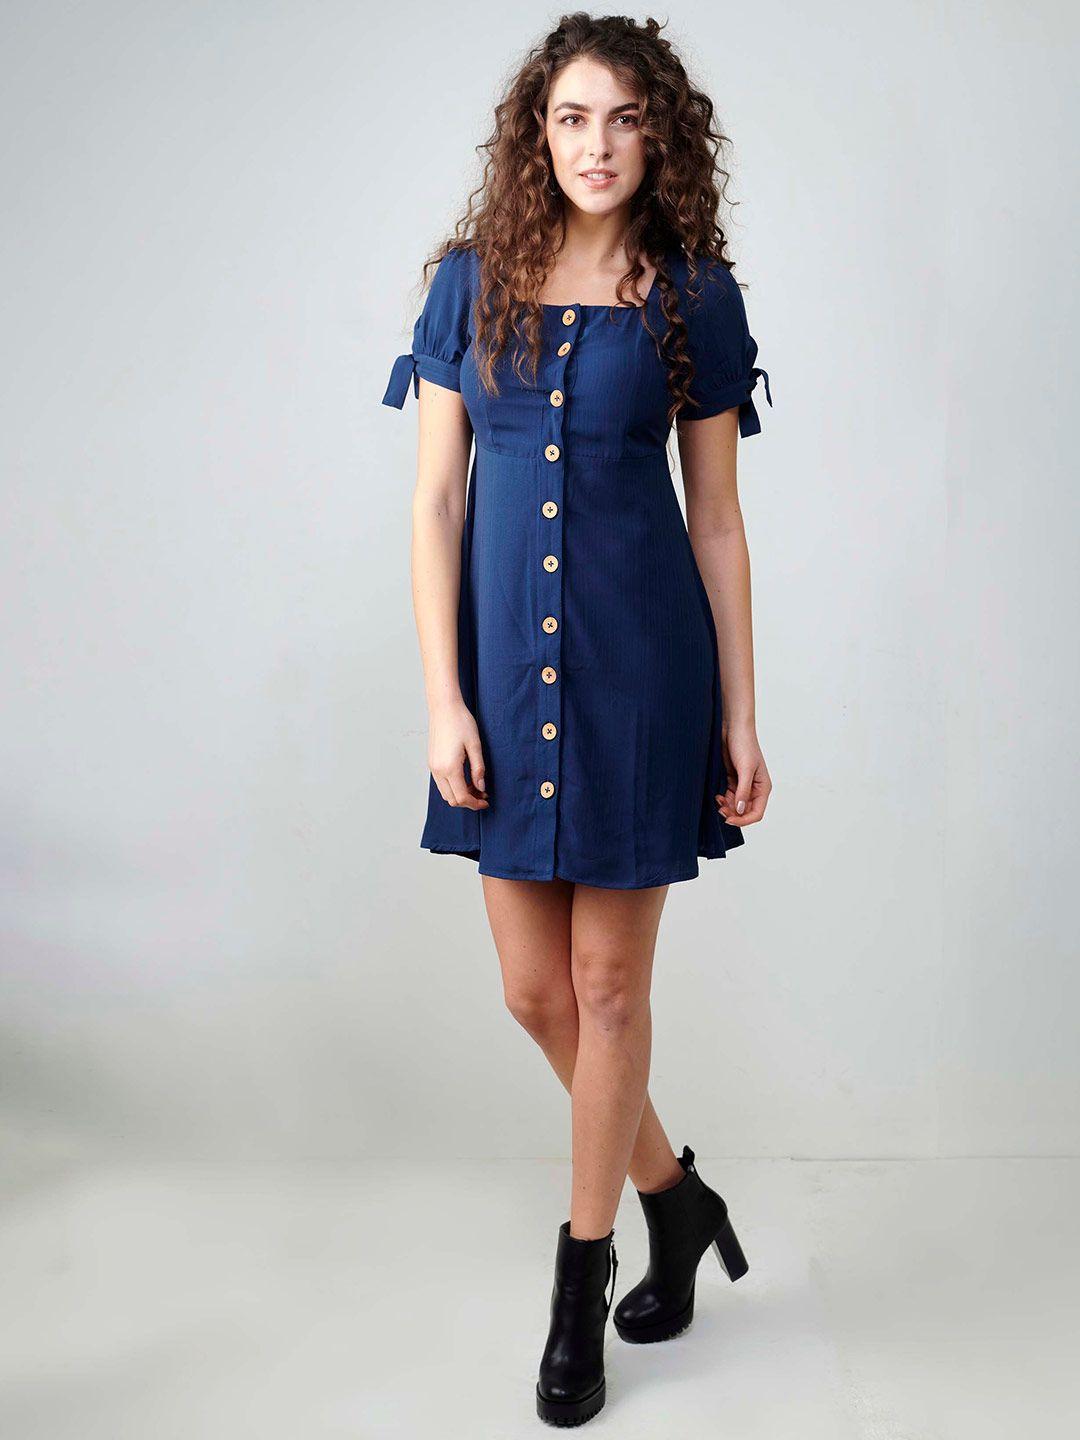 closethook navy blue a-line dress